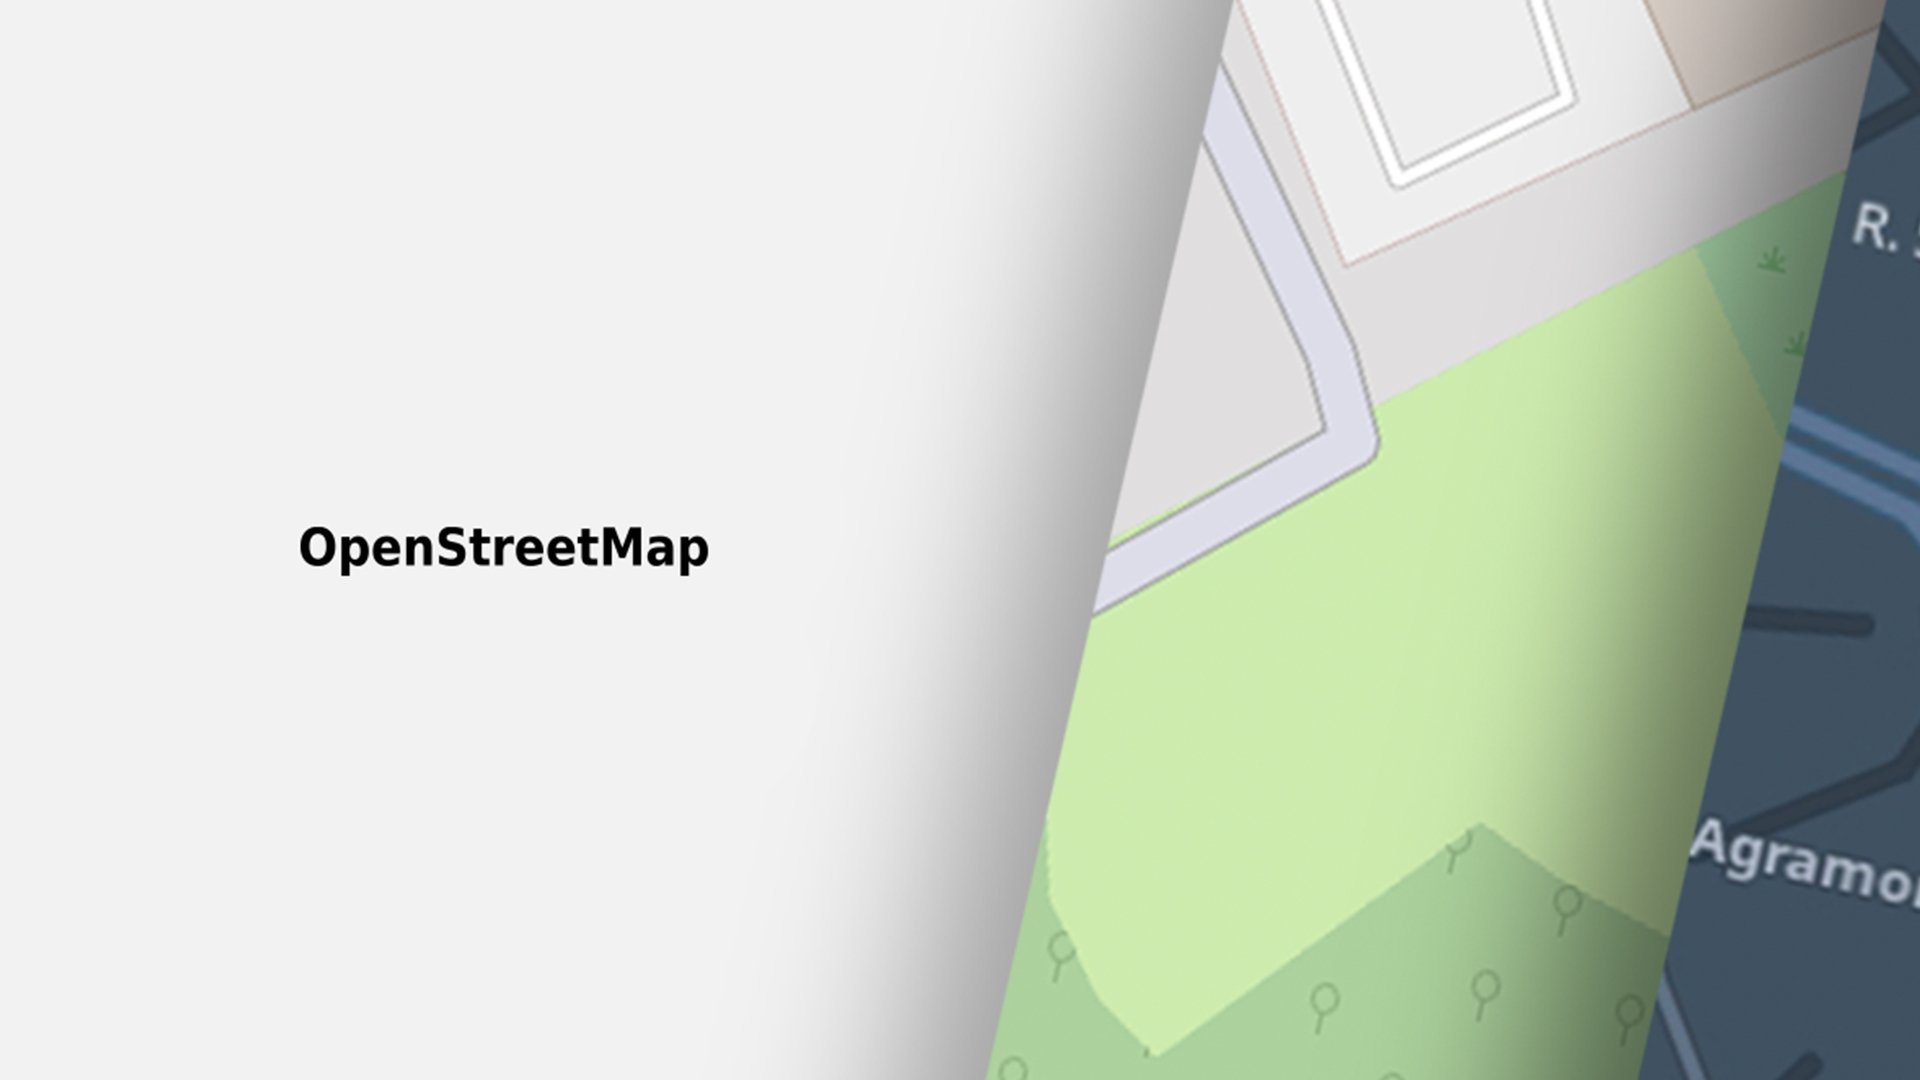 OpenStreetMaps